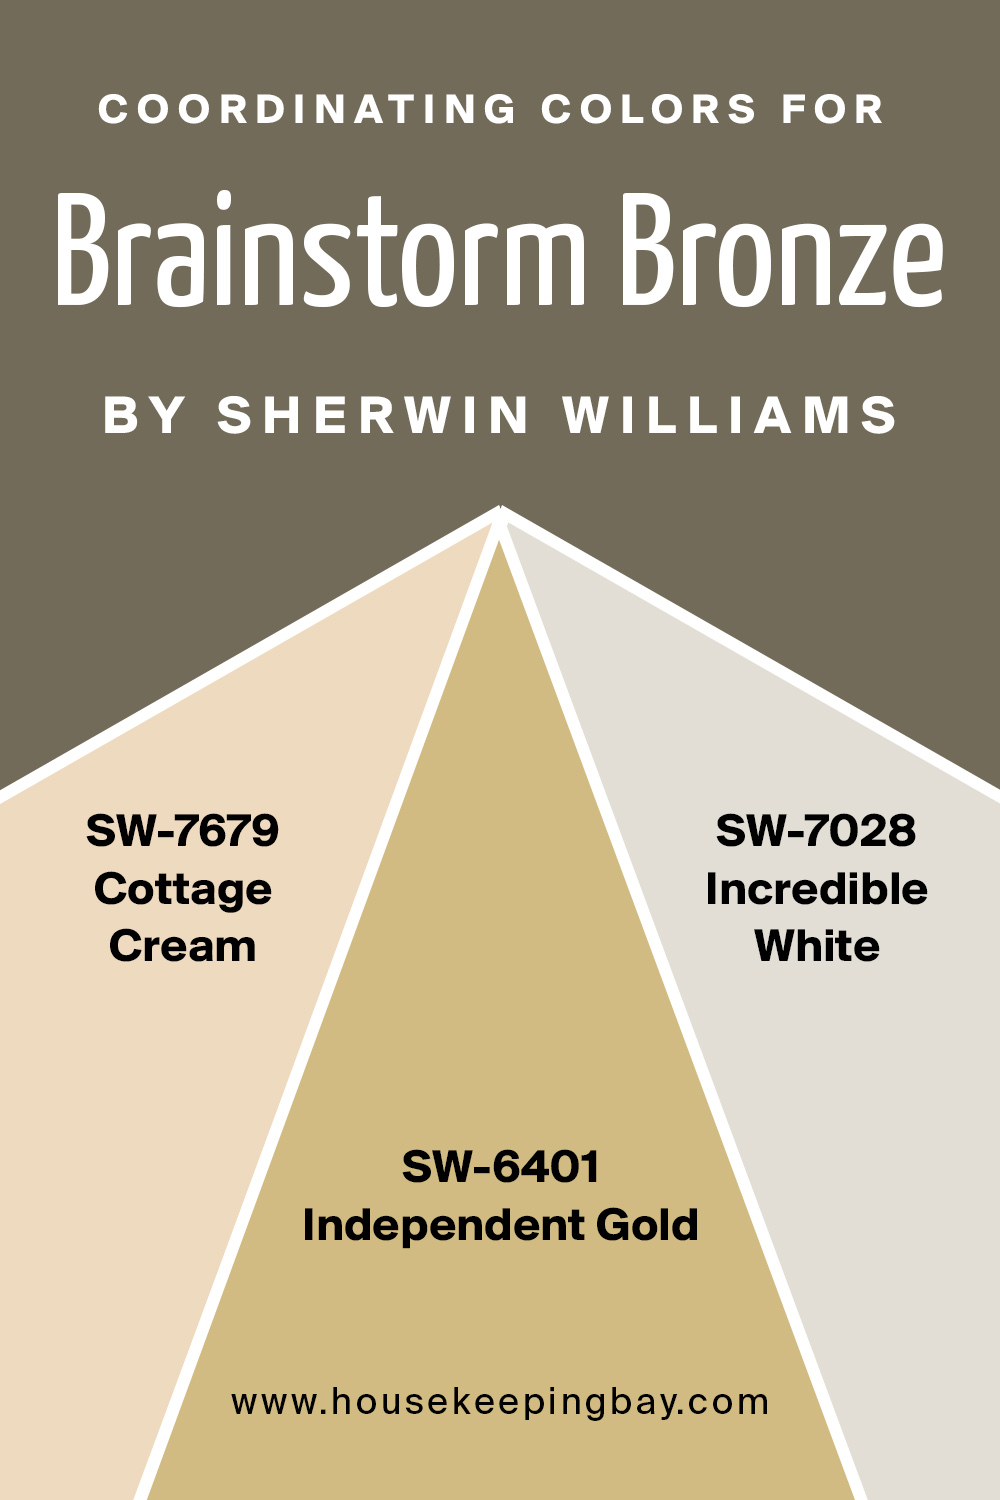 Brainstorm Bronze Coordinating Colors